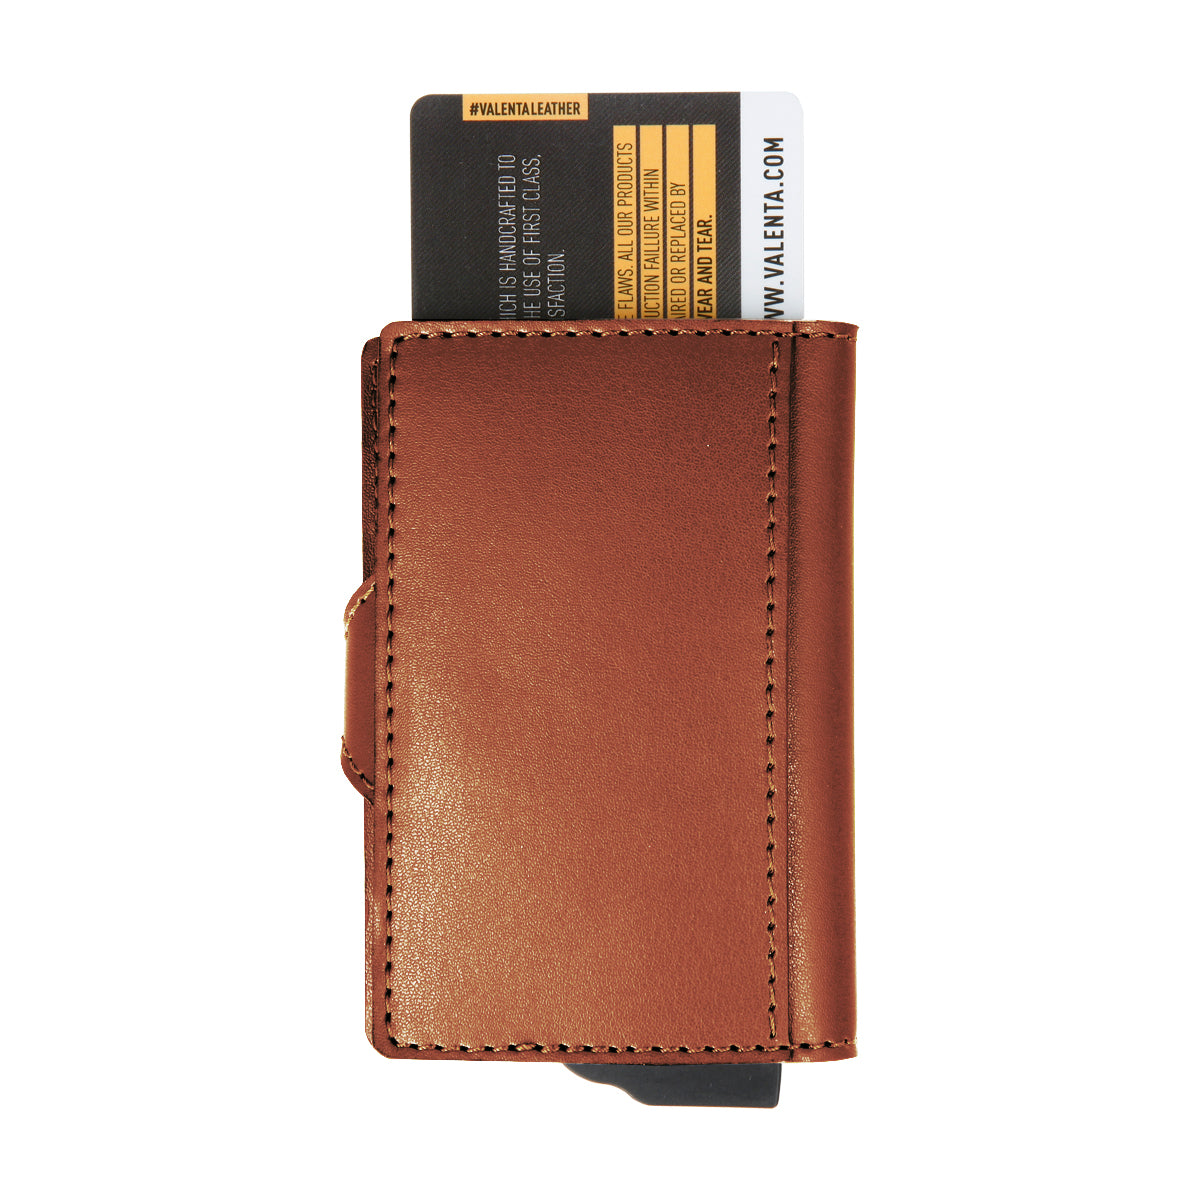 Card Case Plus Wallet Brown